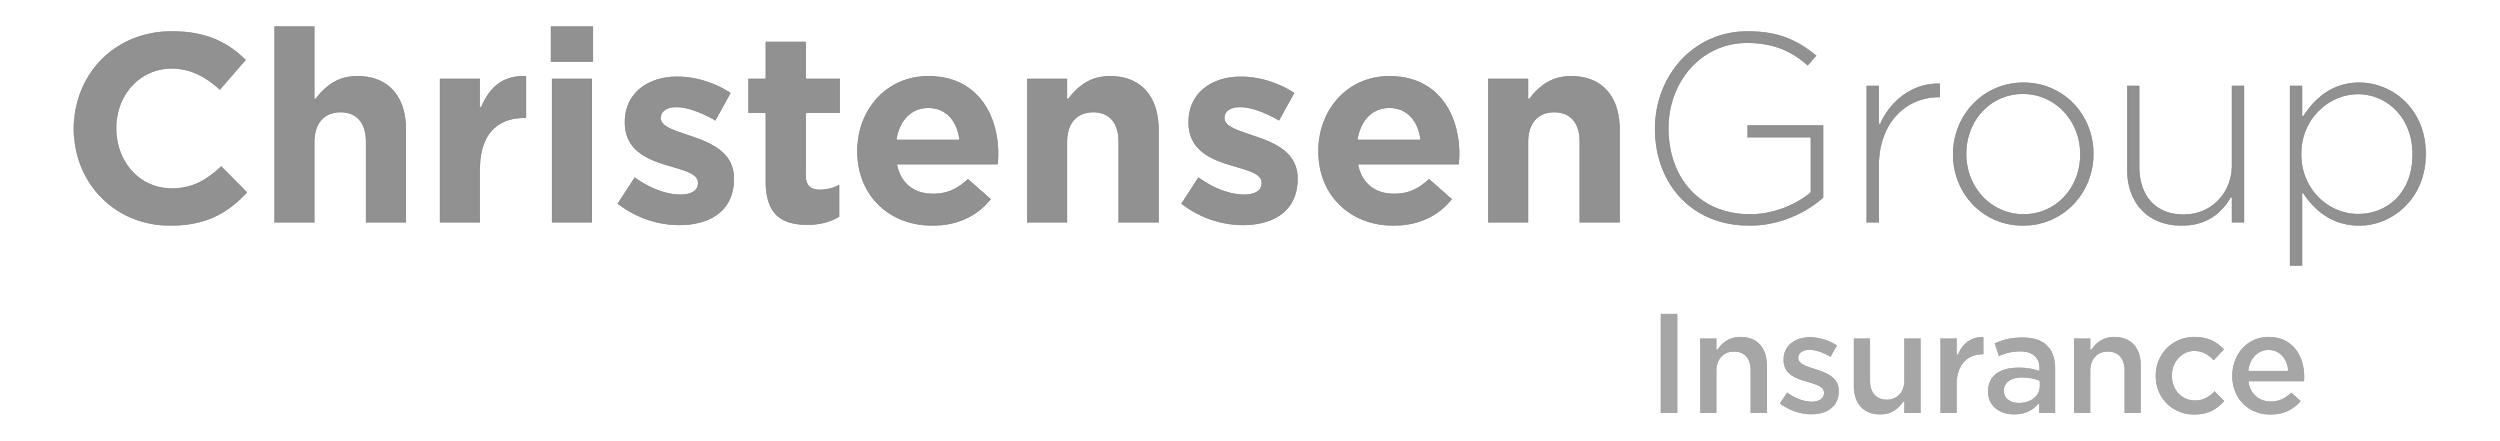 9 Christensen Group Logo.png